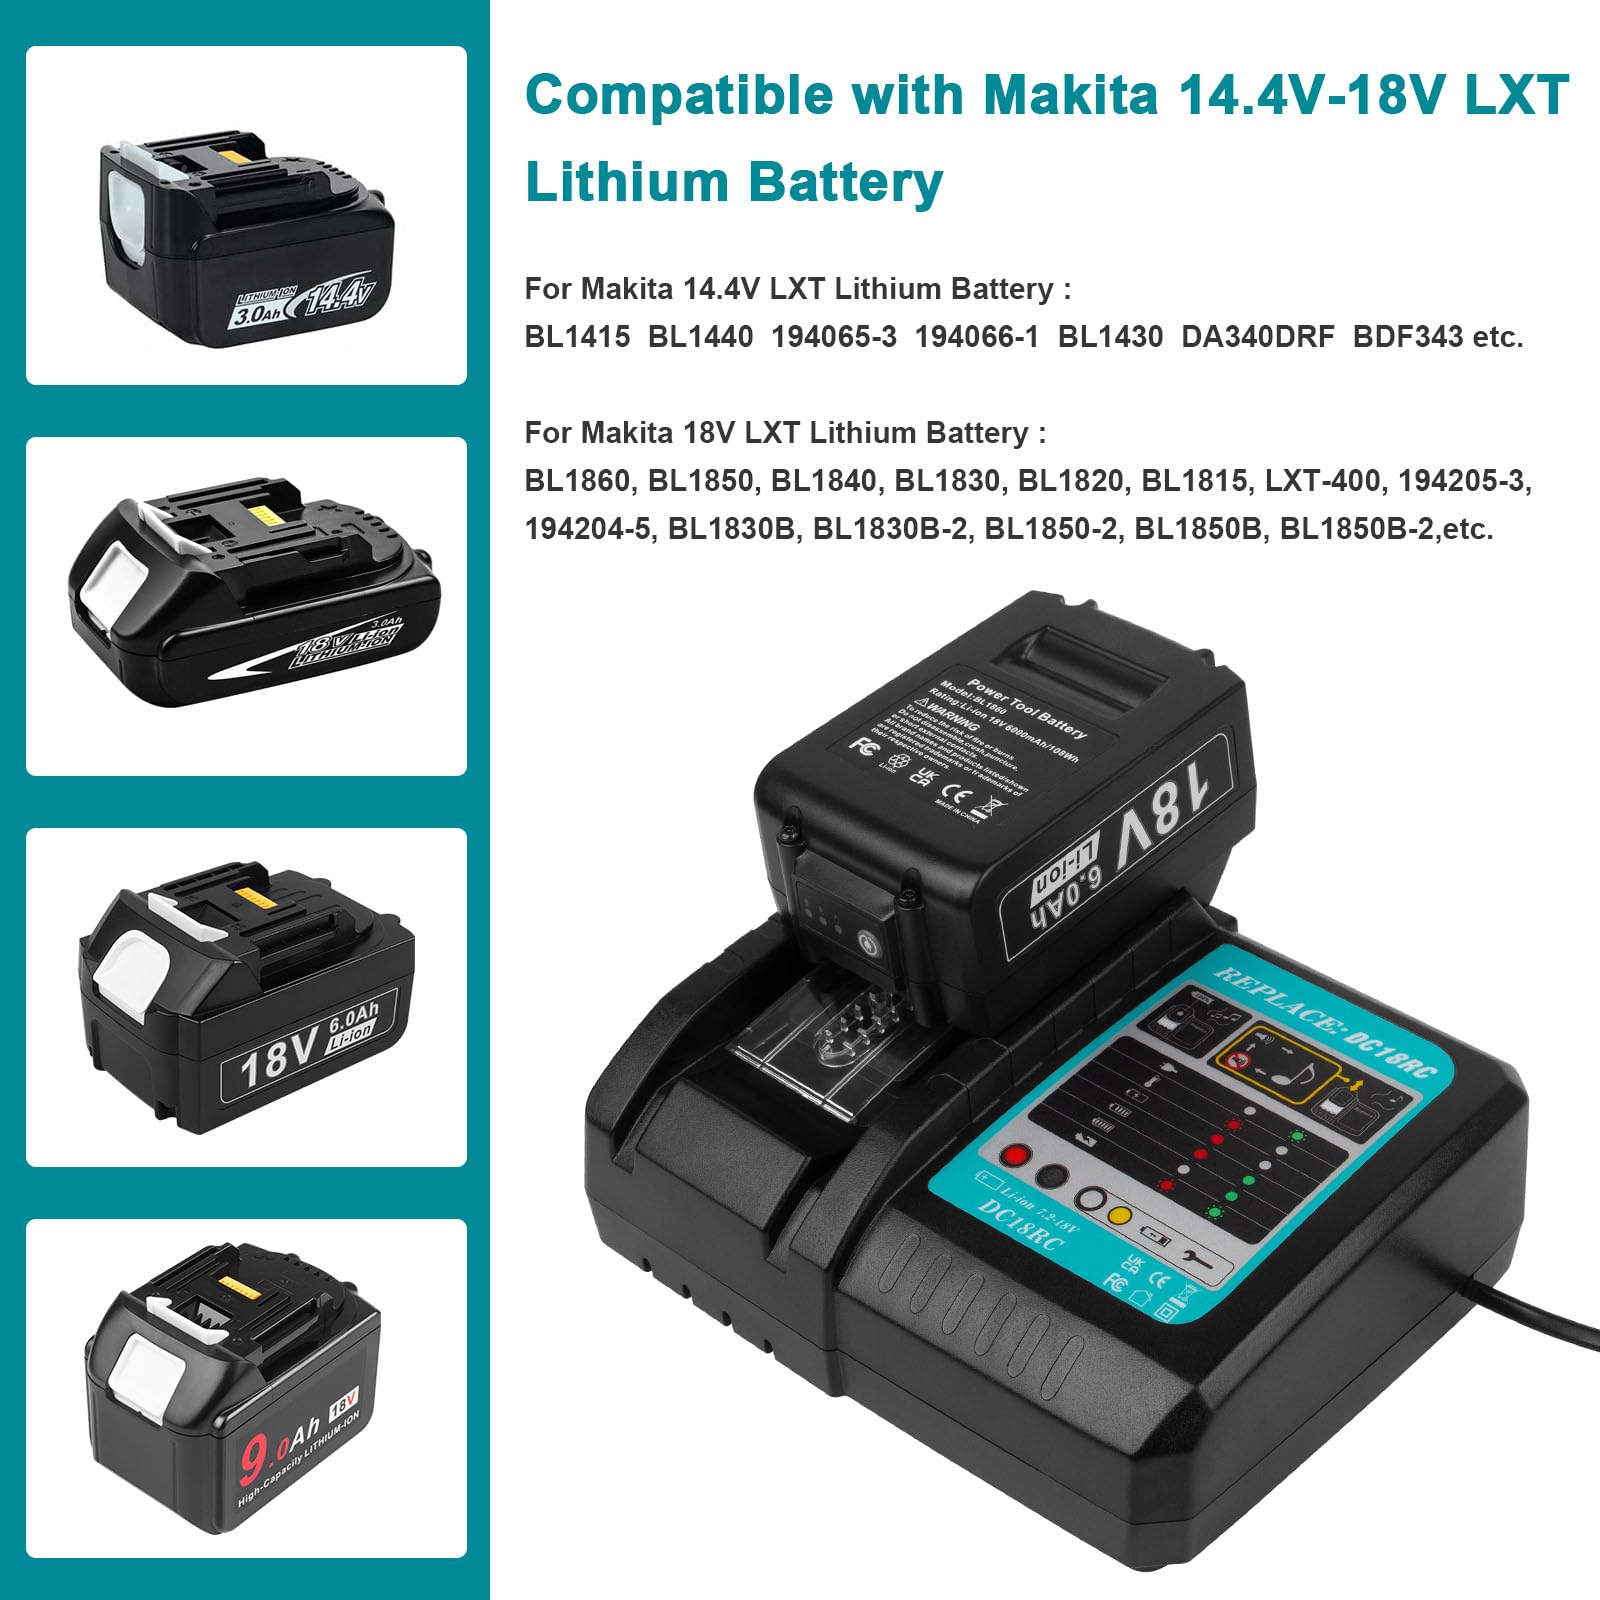 Rapid Battery Charger DC18RC DC18RD DC18RA for Makita Tools 14.4V-18V LXT Li-ion Battery BL1815 BL1820 BL1830 BL1850 BL1860 BL1840 BL1430 BL1415